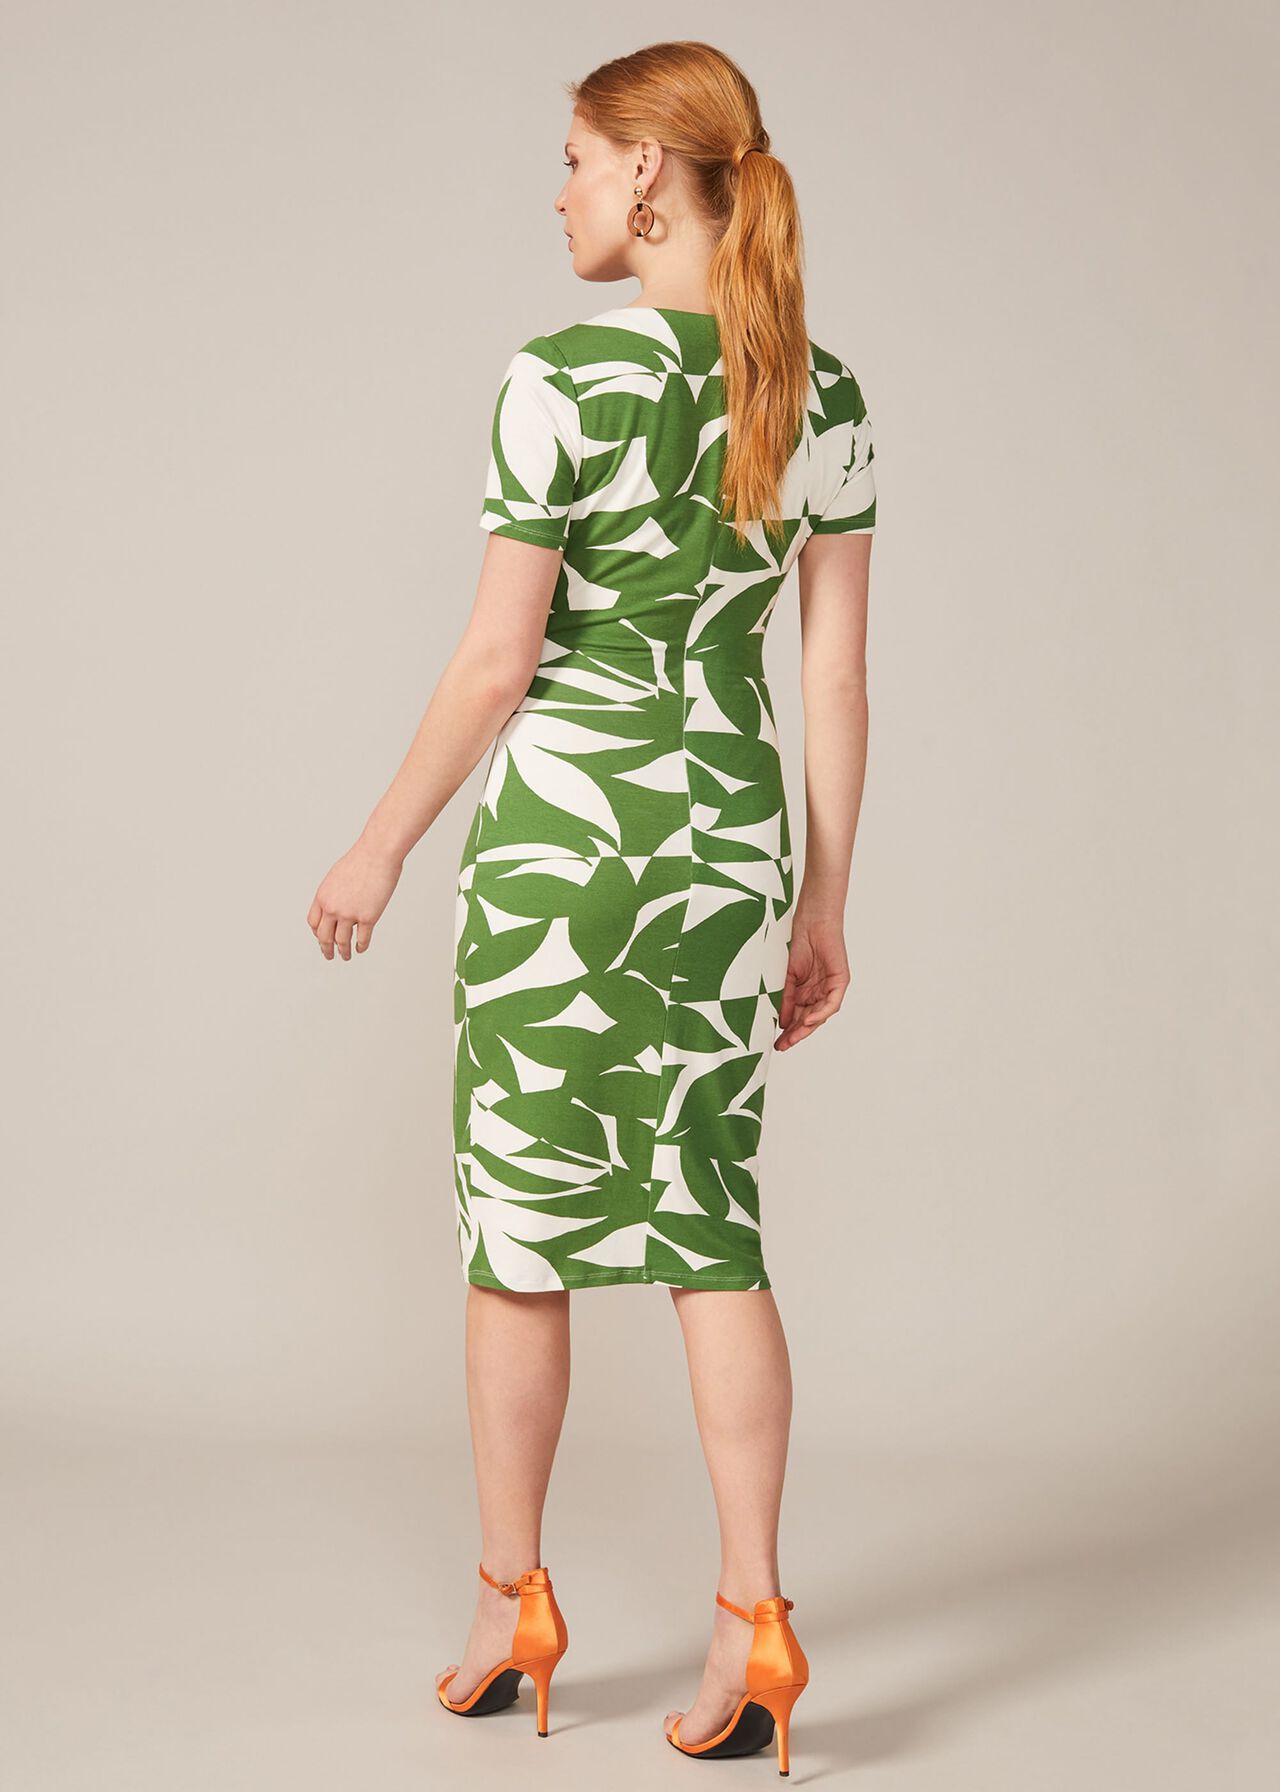 Gladys Leaf Print Jersey Dress